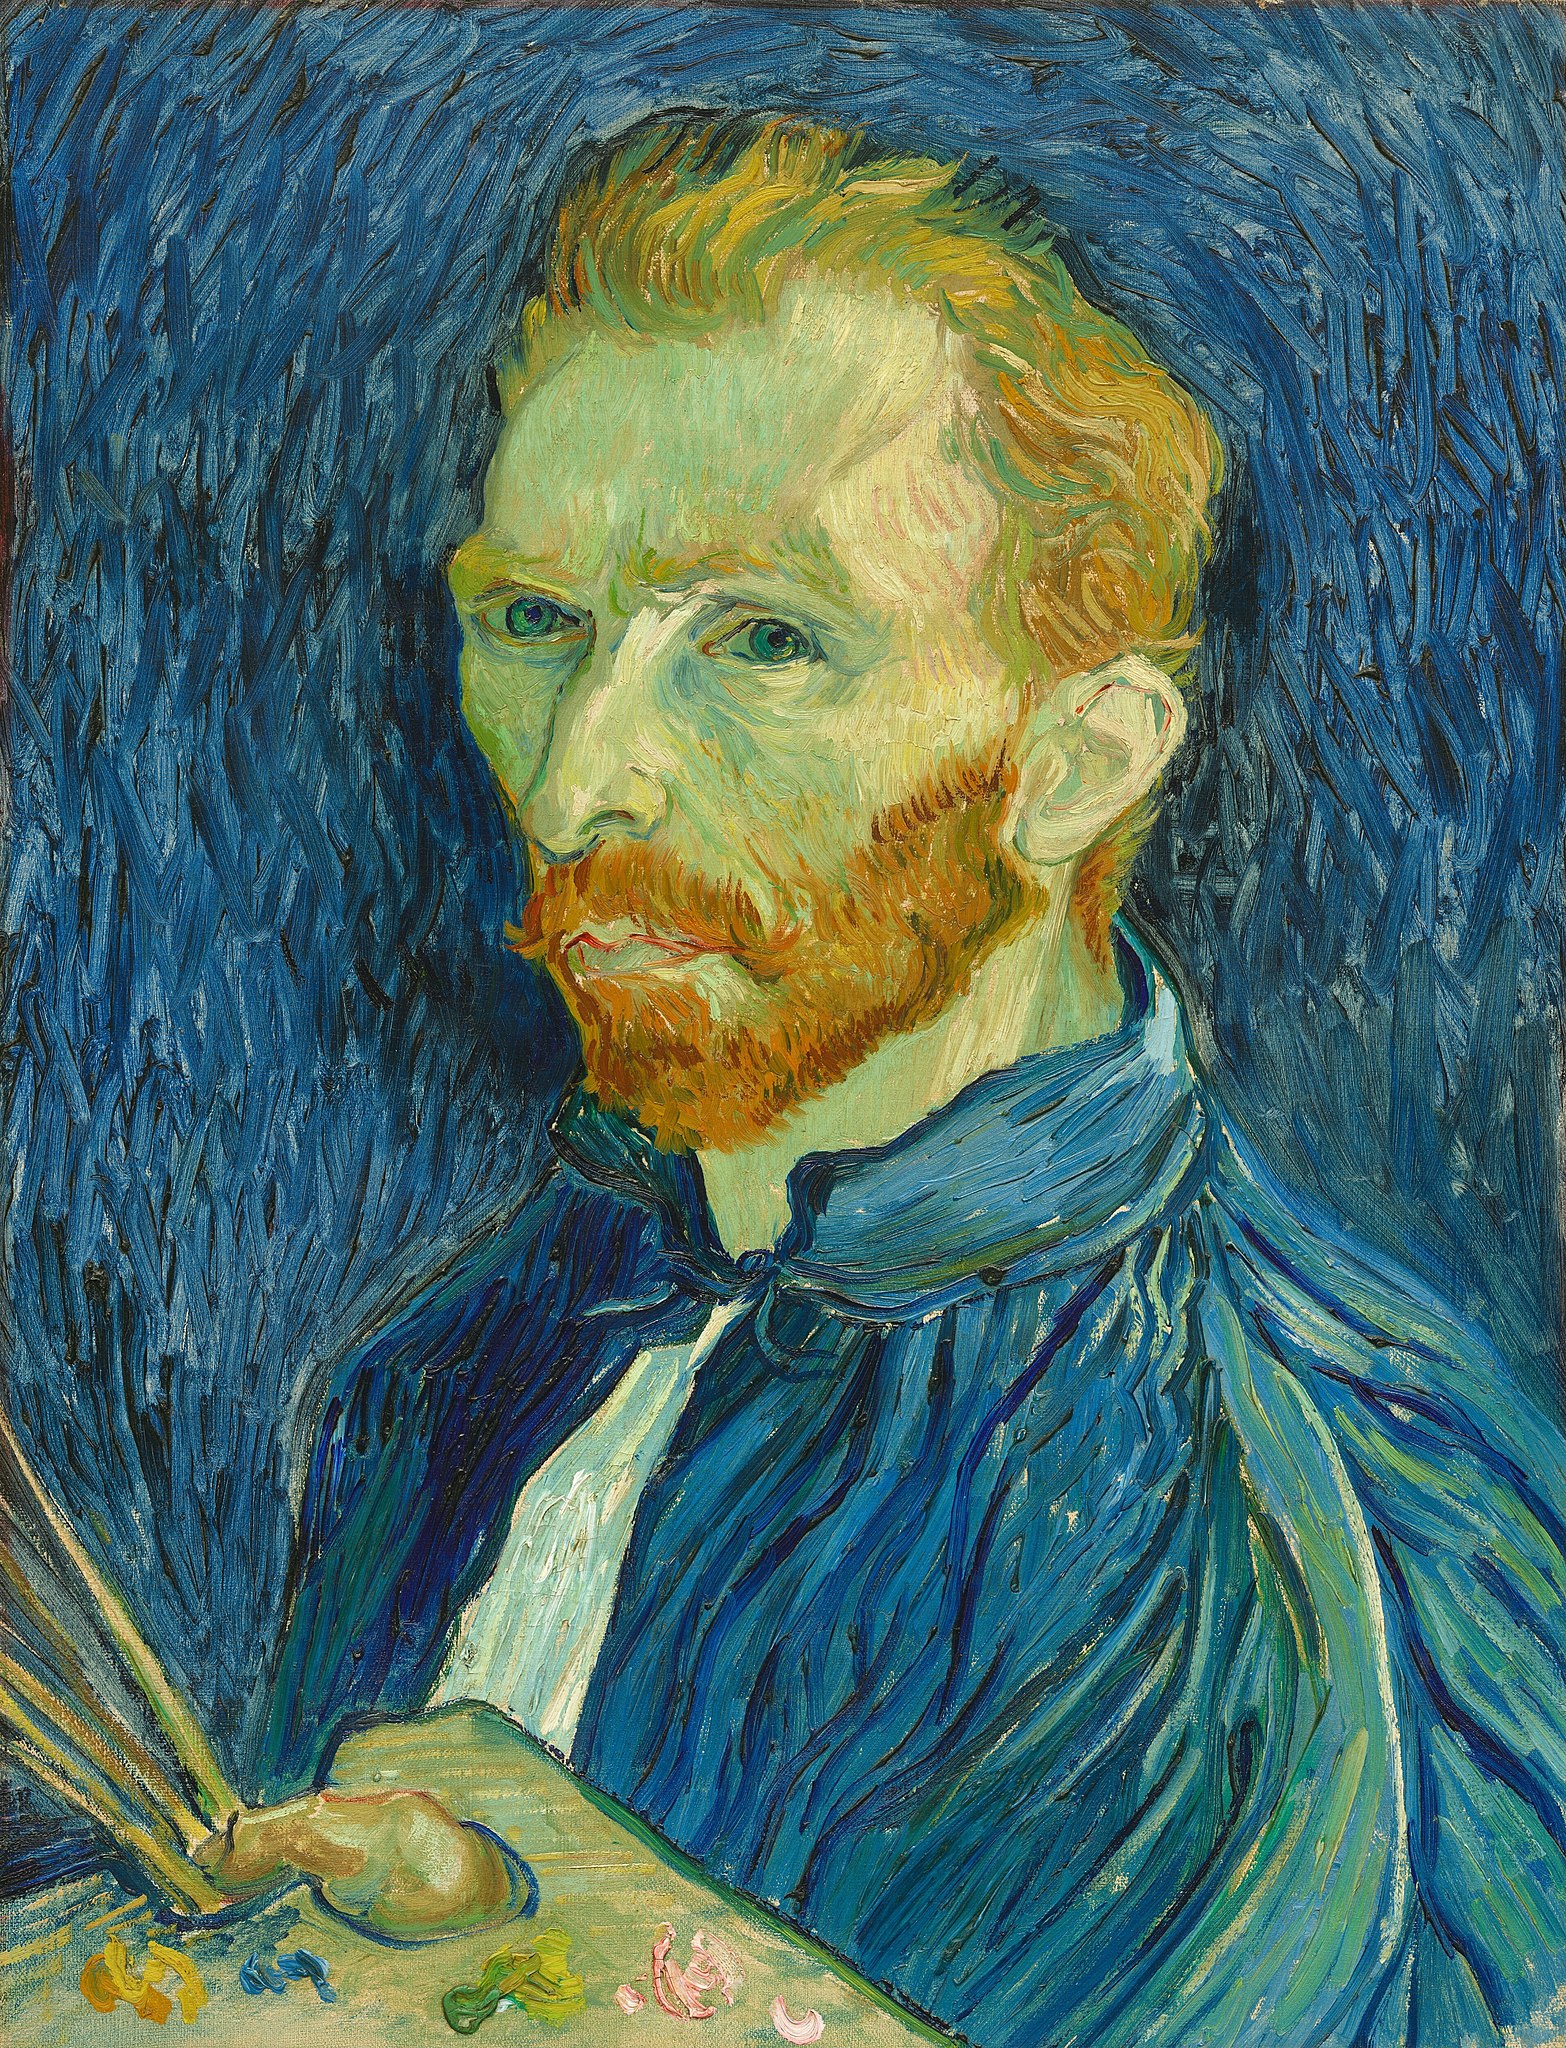 Self-Portrait by Vincent van Gogh - 1889 - 43.8 x 57.1 cm National Gallery of Art